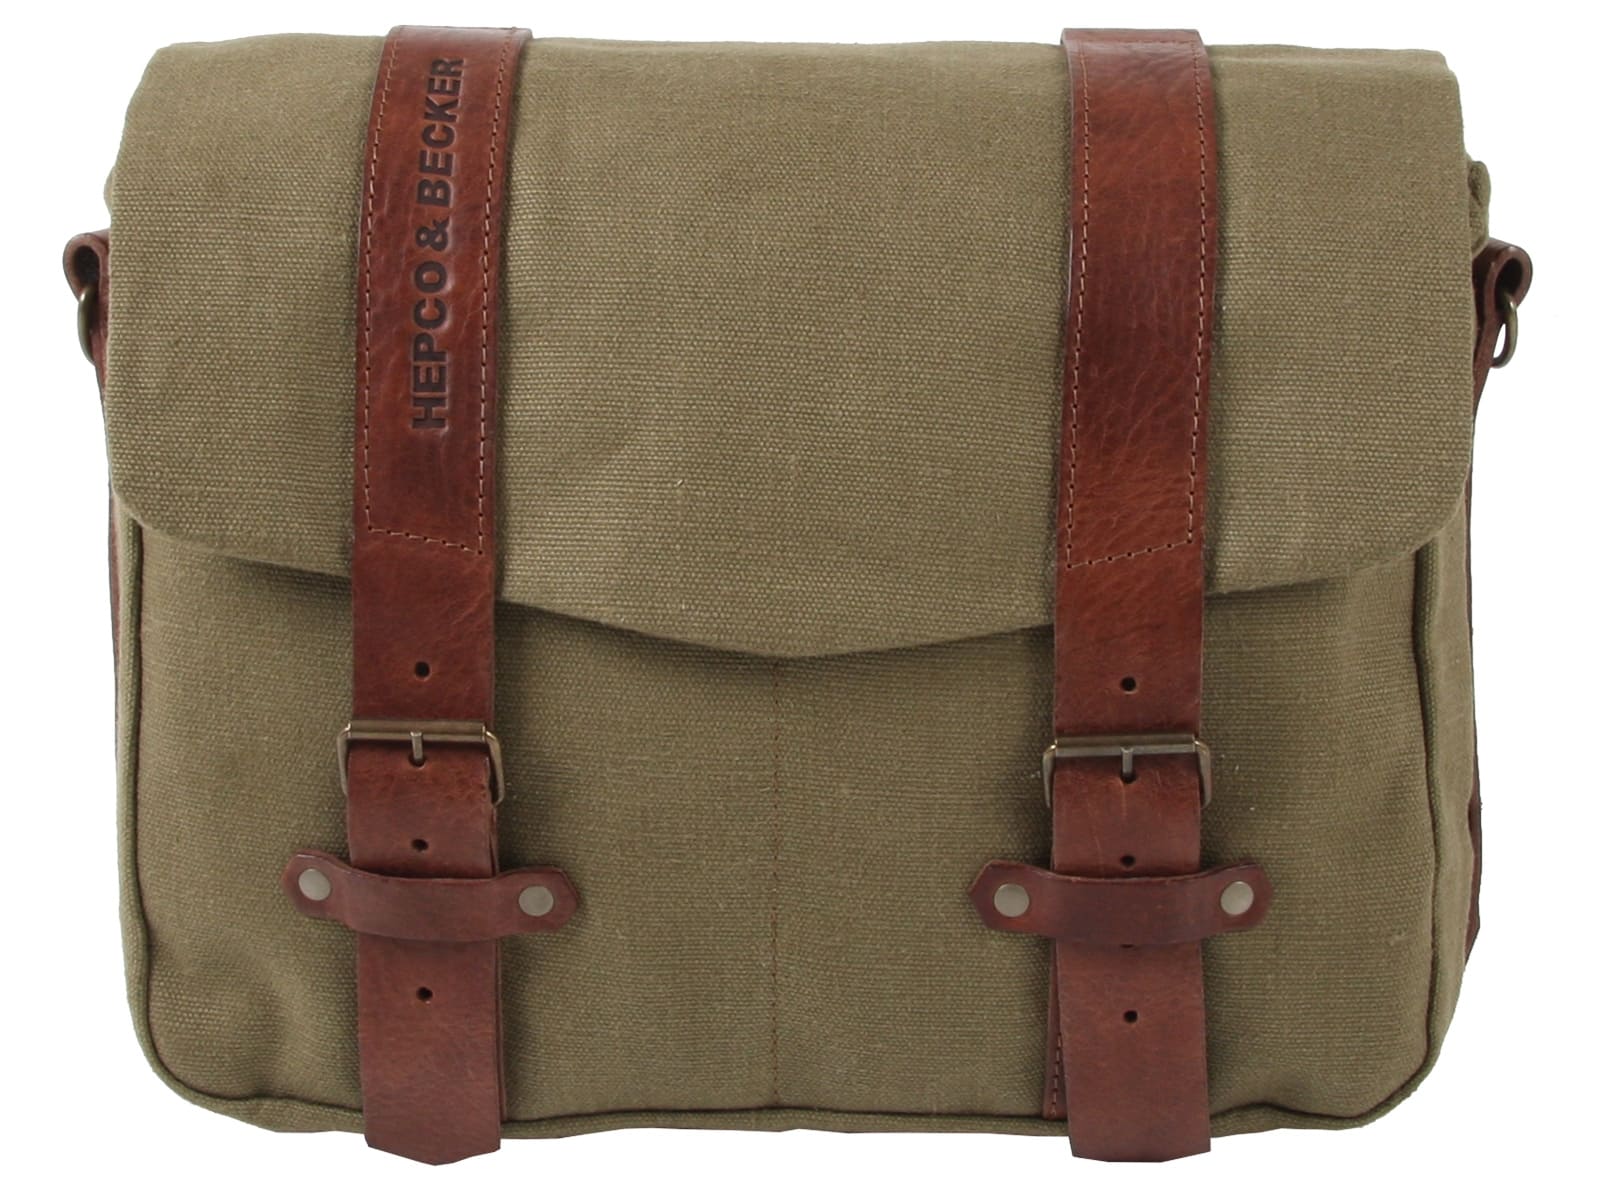 Coach Legacy Brooklyn Dk Brown Pocket Leather Large Messenger Tote Bag |  Messenger tote, Coach legacy, Bags